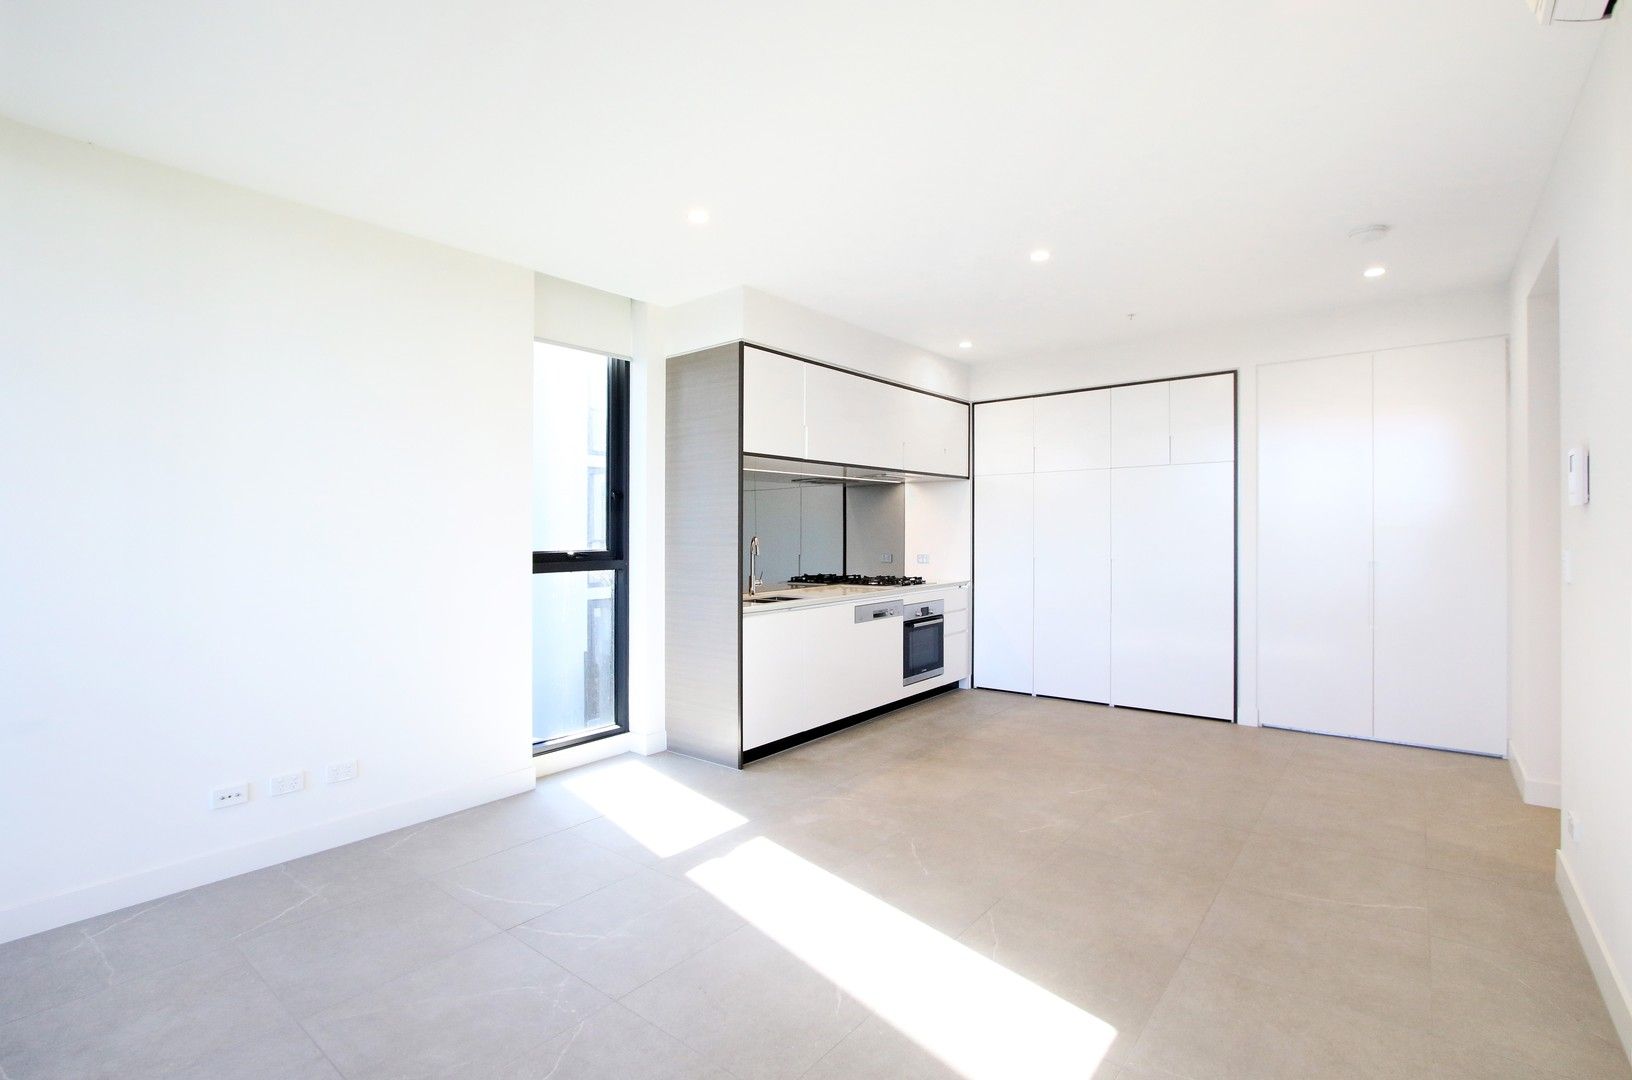 2 bedrooms House in J717/2 Morton Street PARRAMATTA NSW, 2150